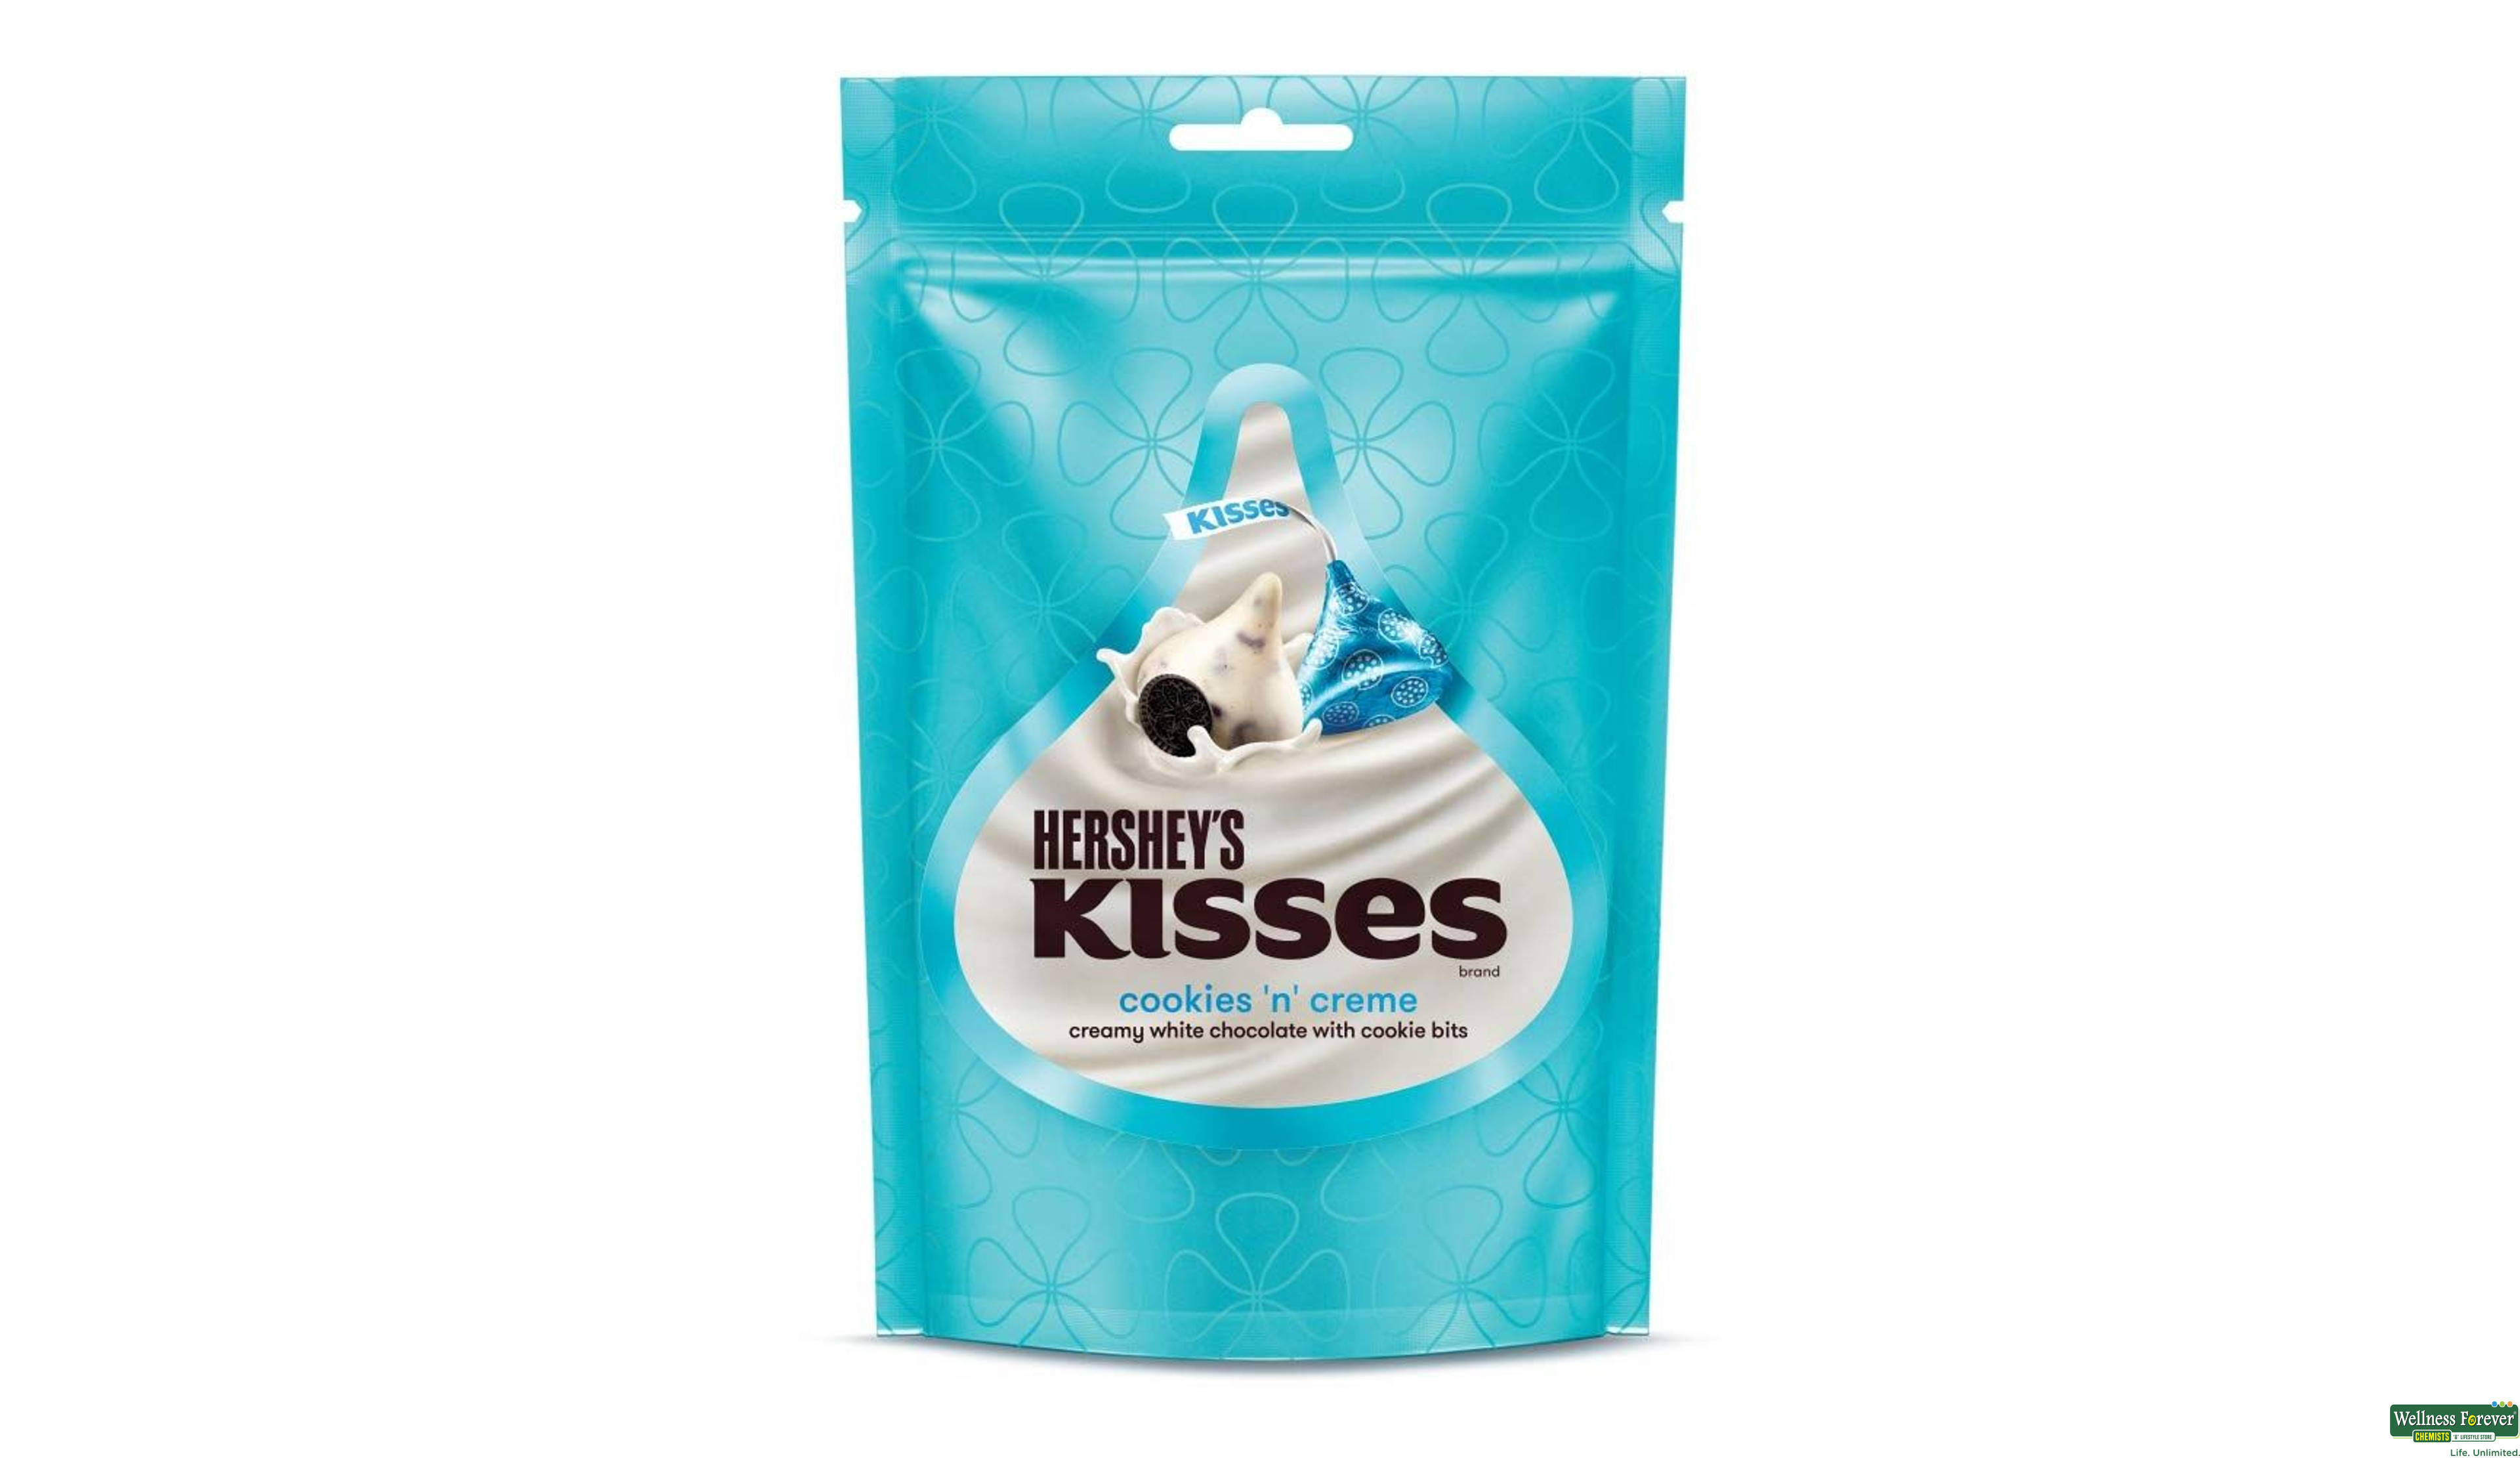 HERSHEYS CHOC KISSES COOKIES/CRM 100.8GM- 1, 100.8GM, 